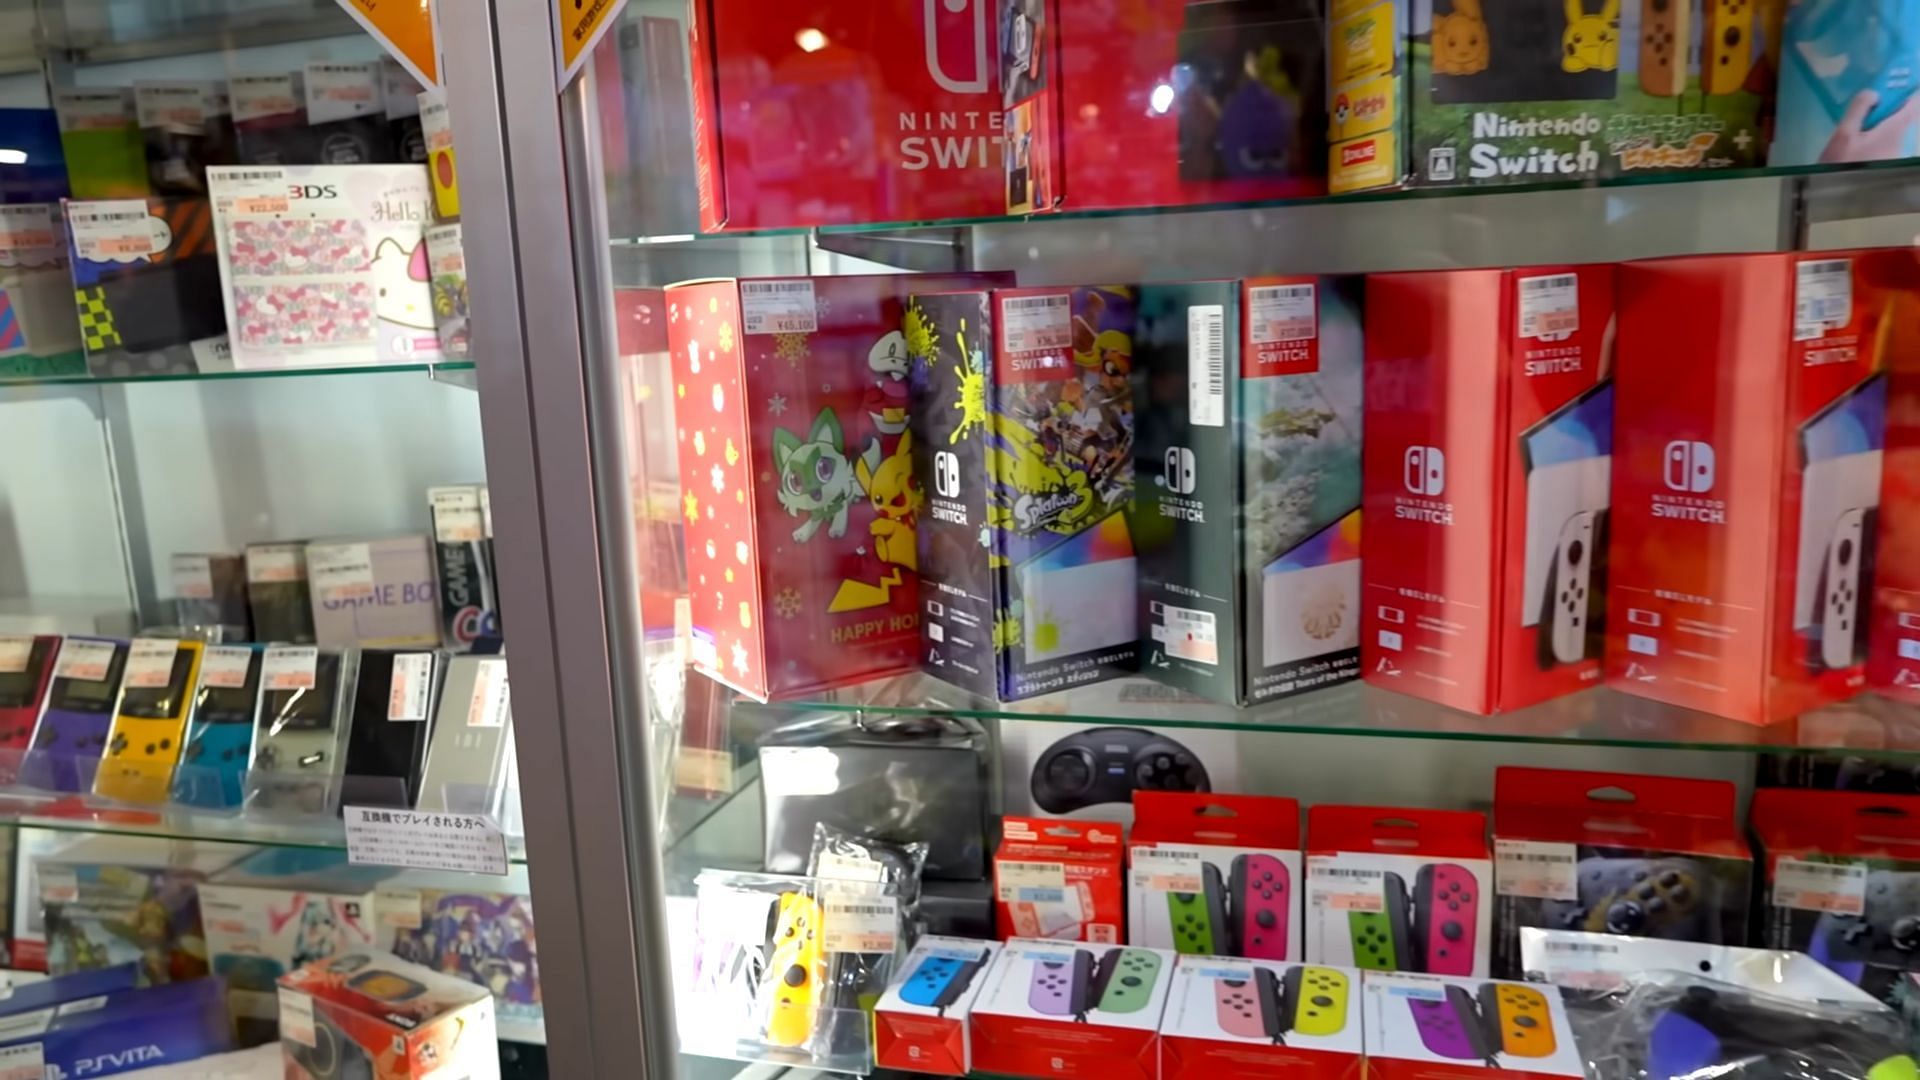 Huge library of Nintendo Switch games (Image via BeatEmUps/YouTube)